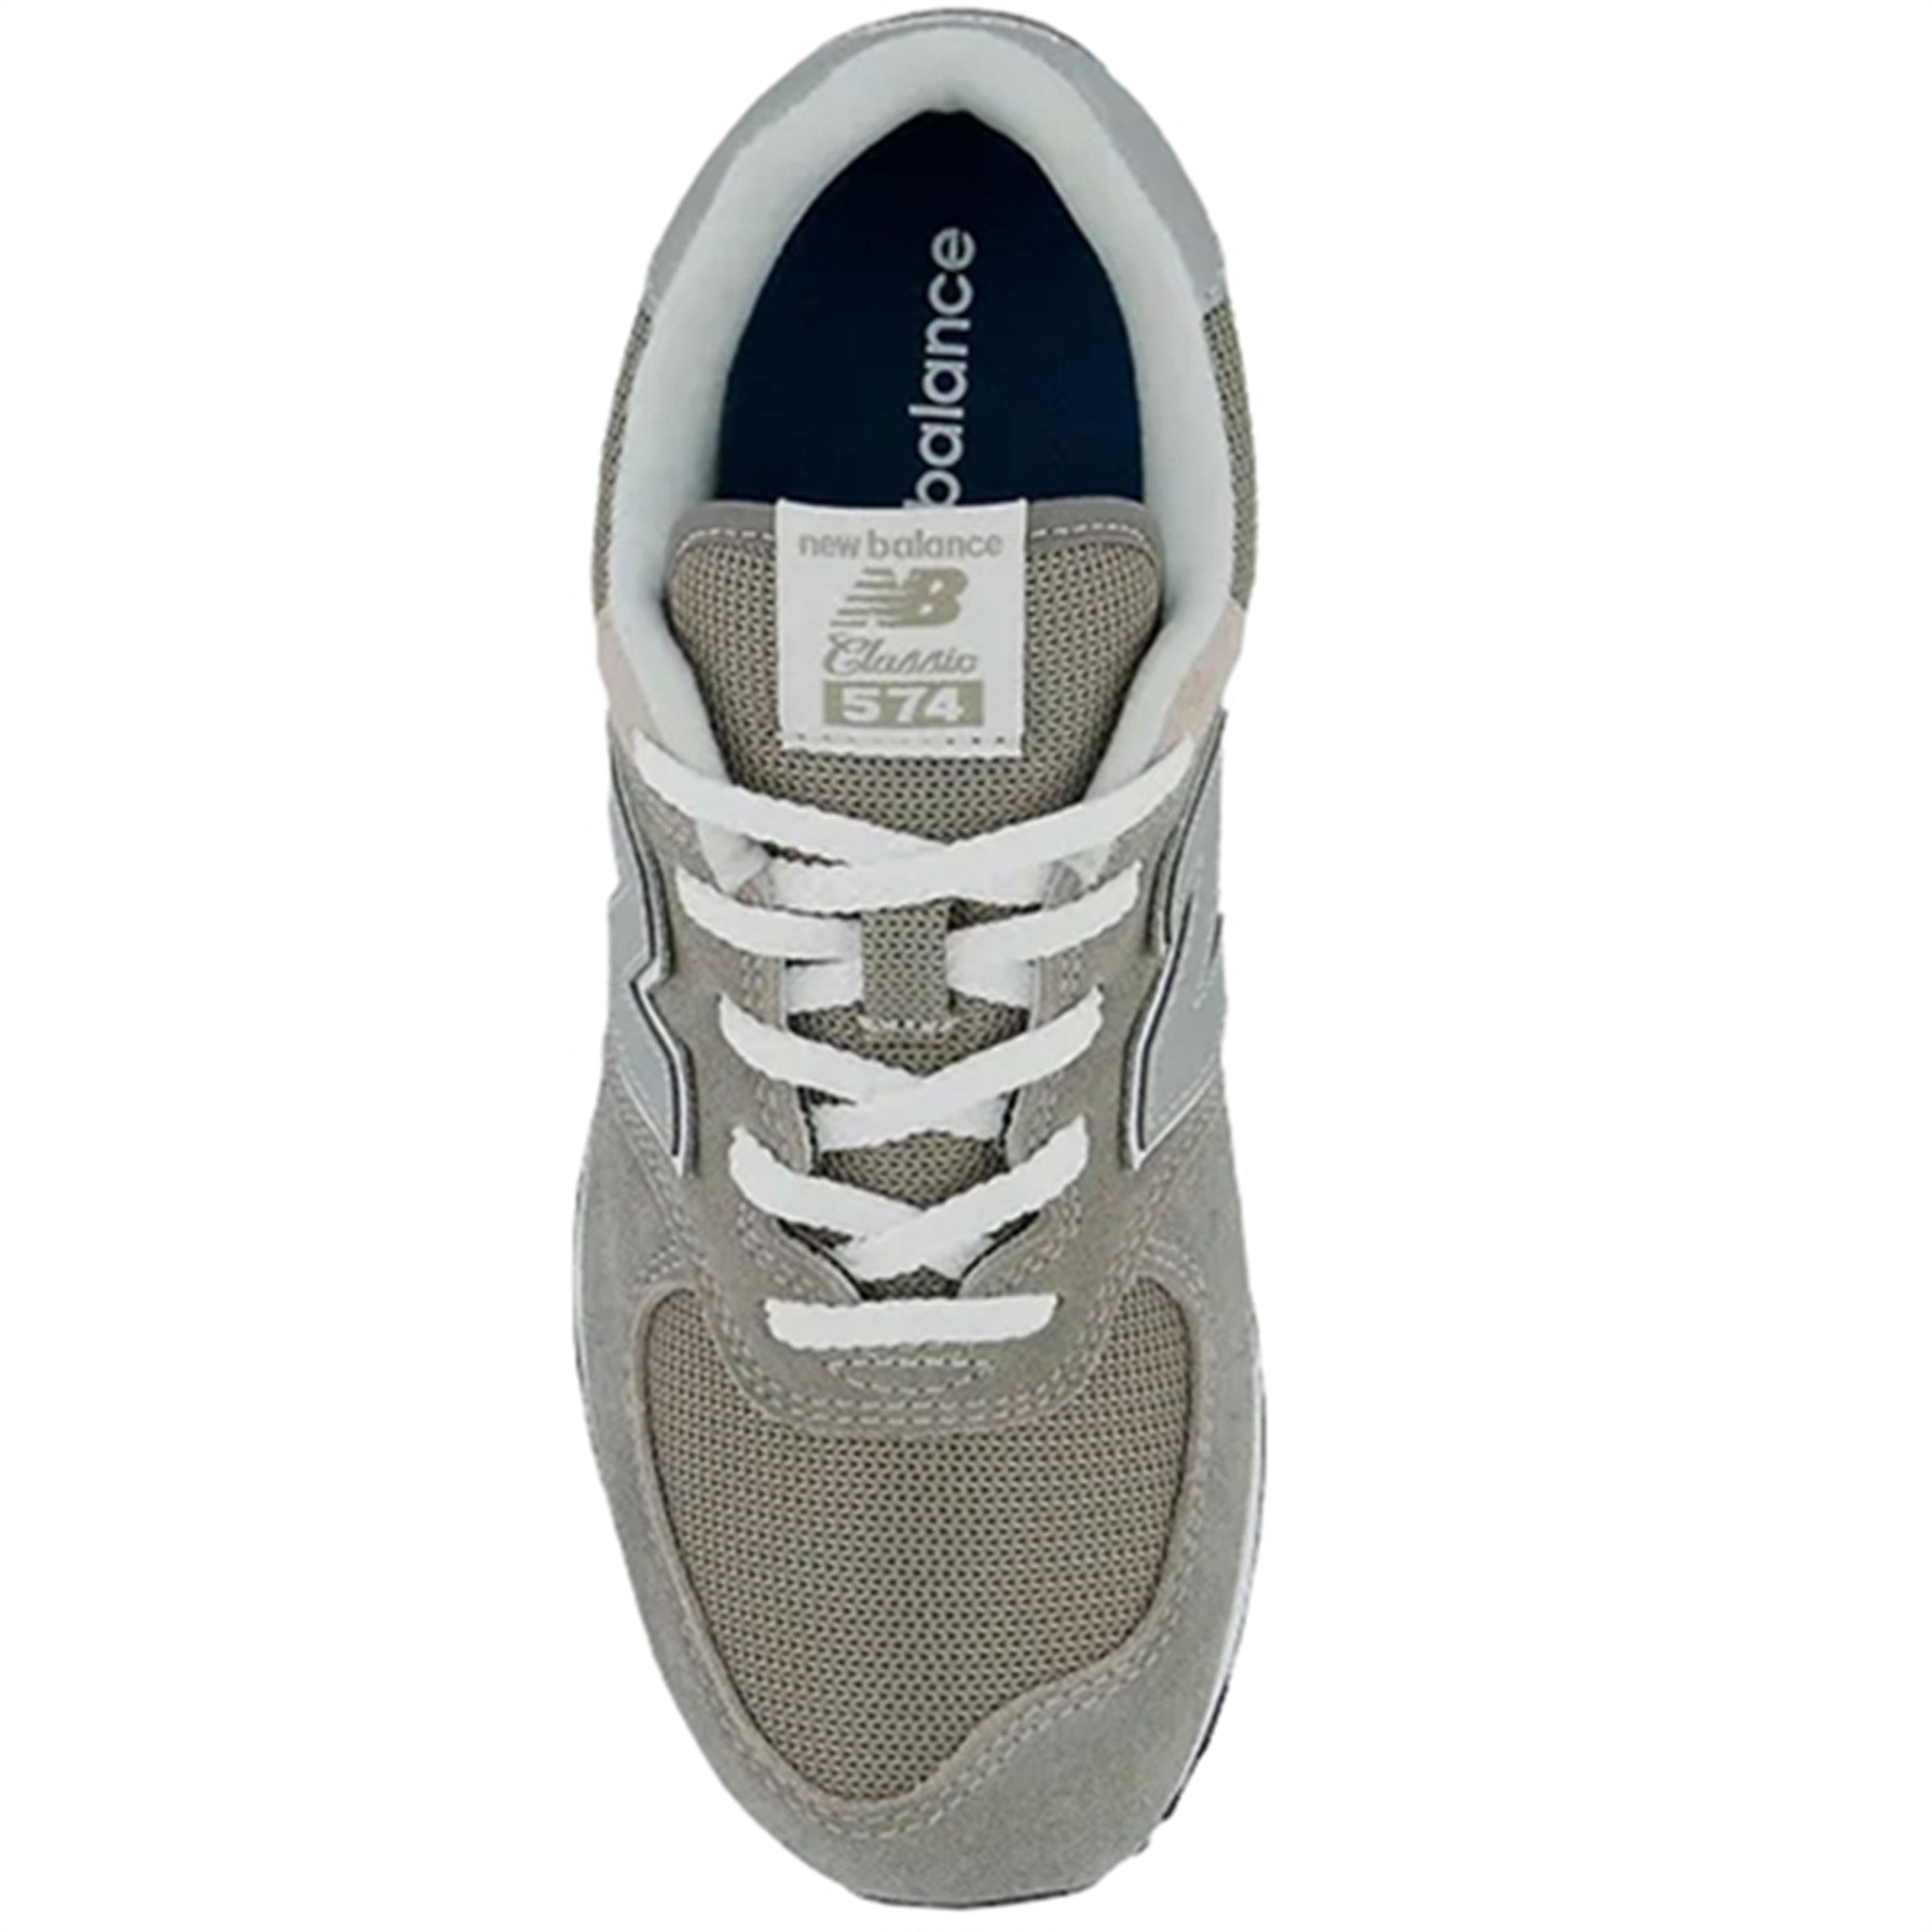 New Balance 574 Black/White Sneakers 2